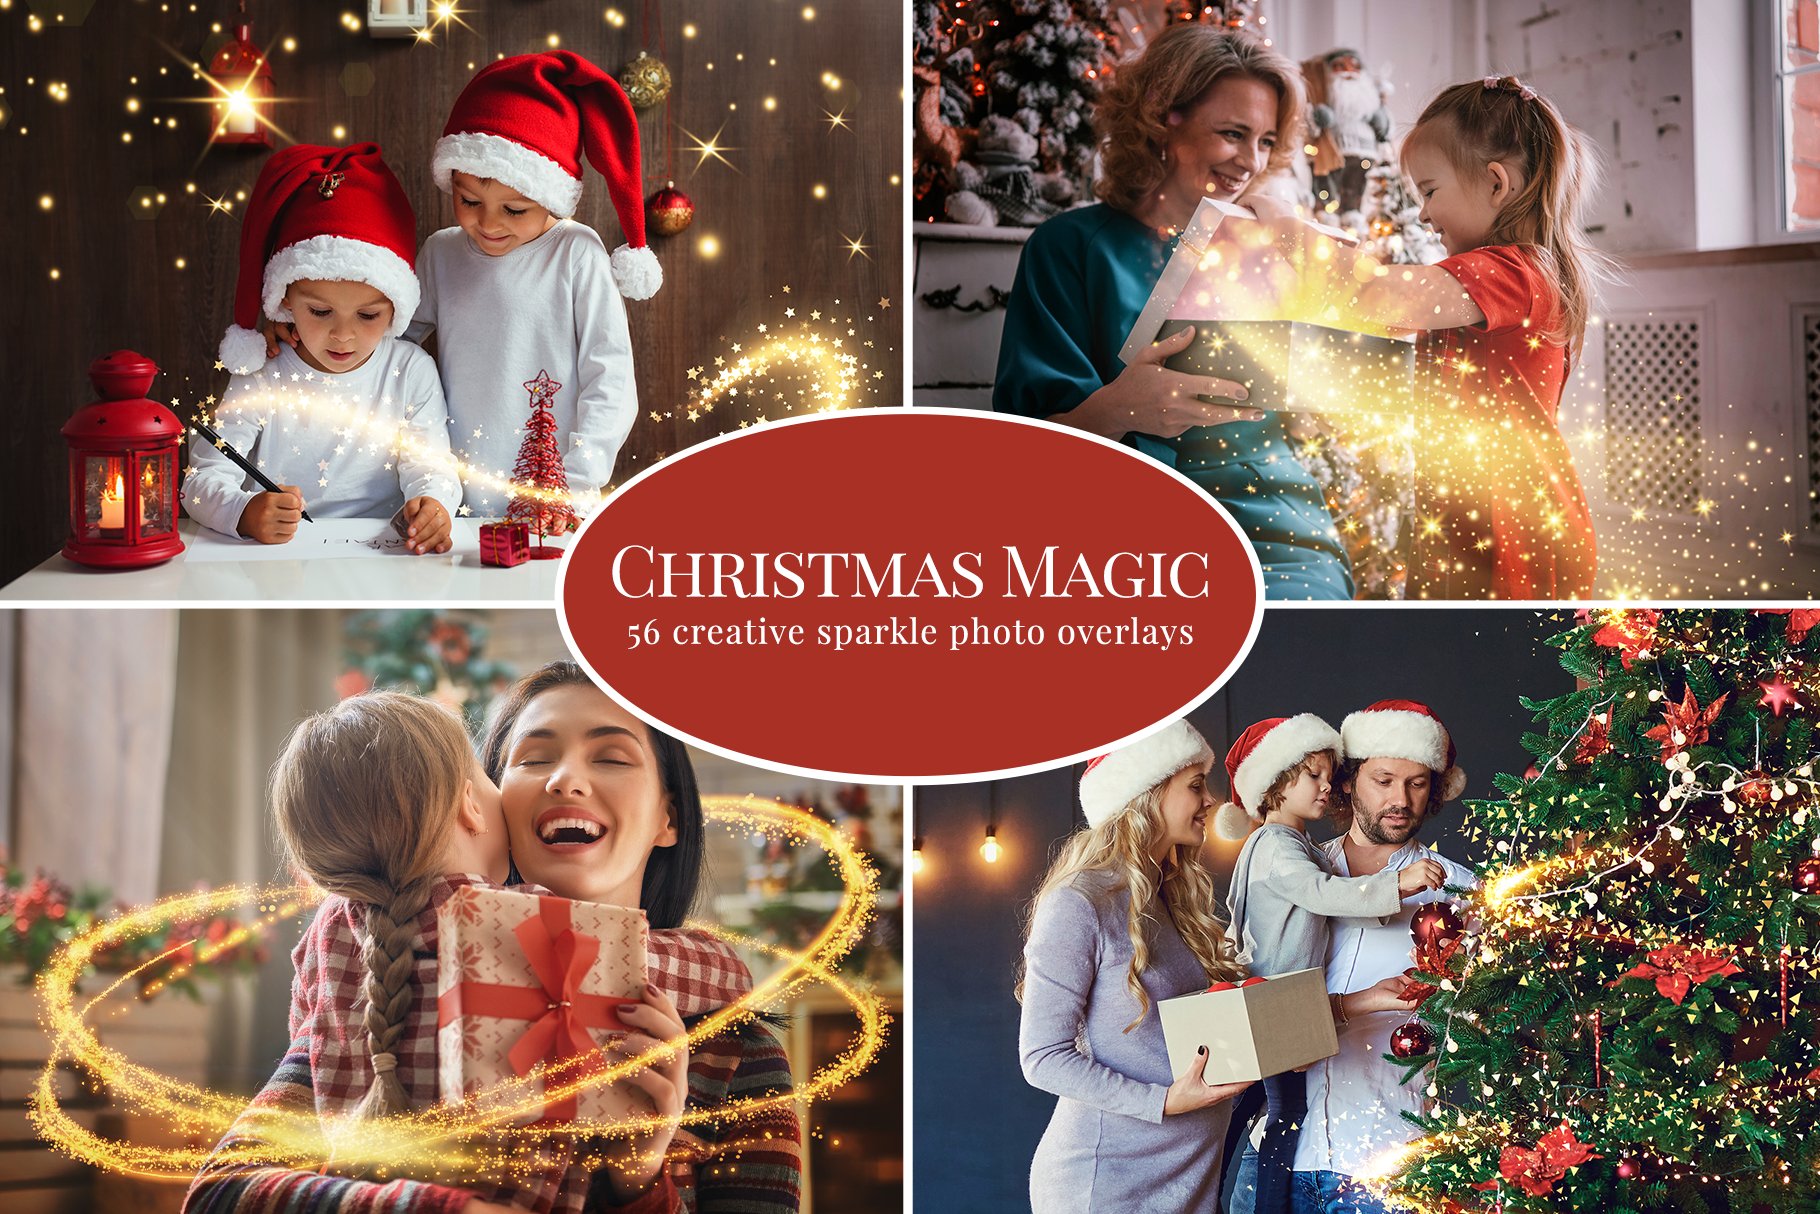 Christmas Magic photo overlayscover image.